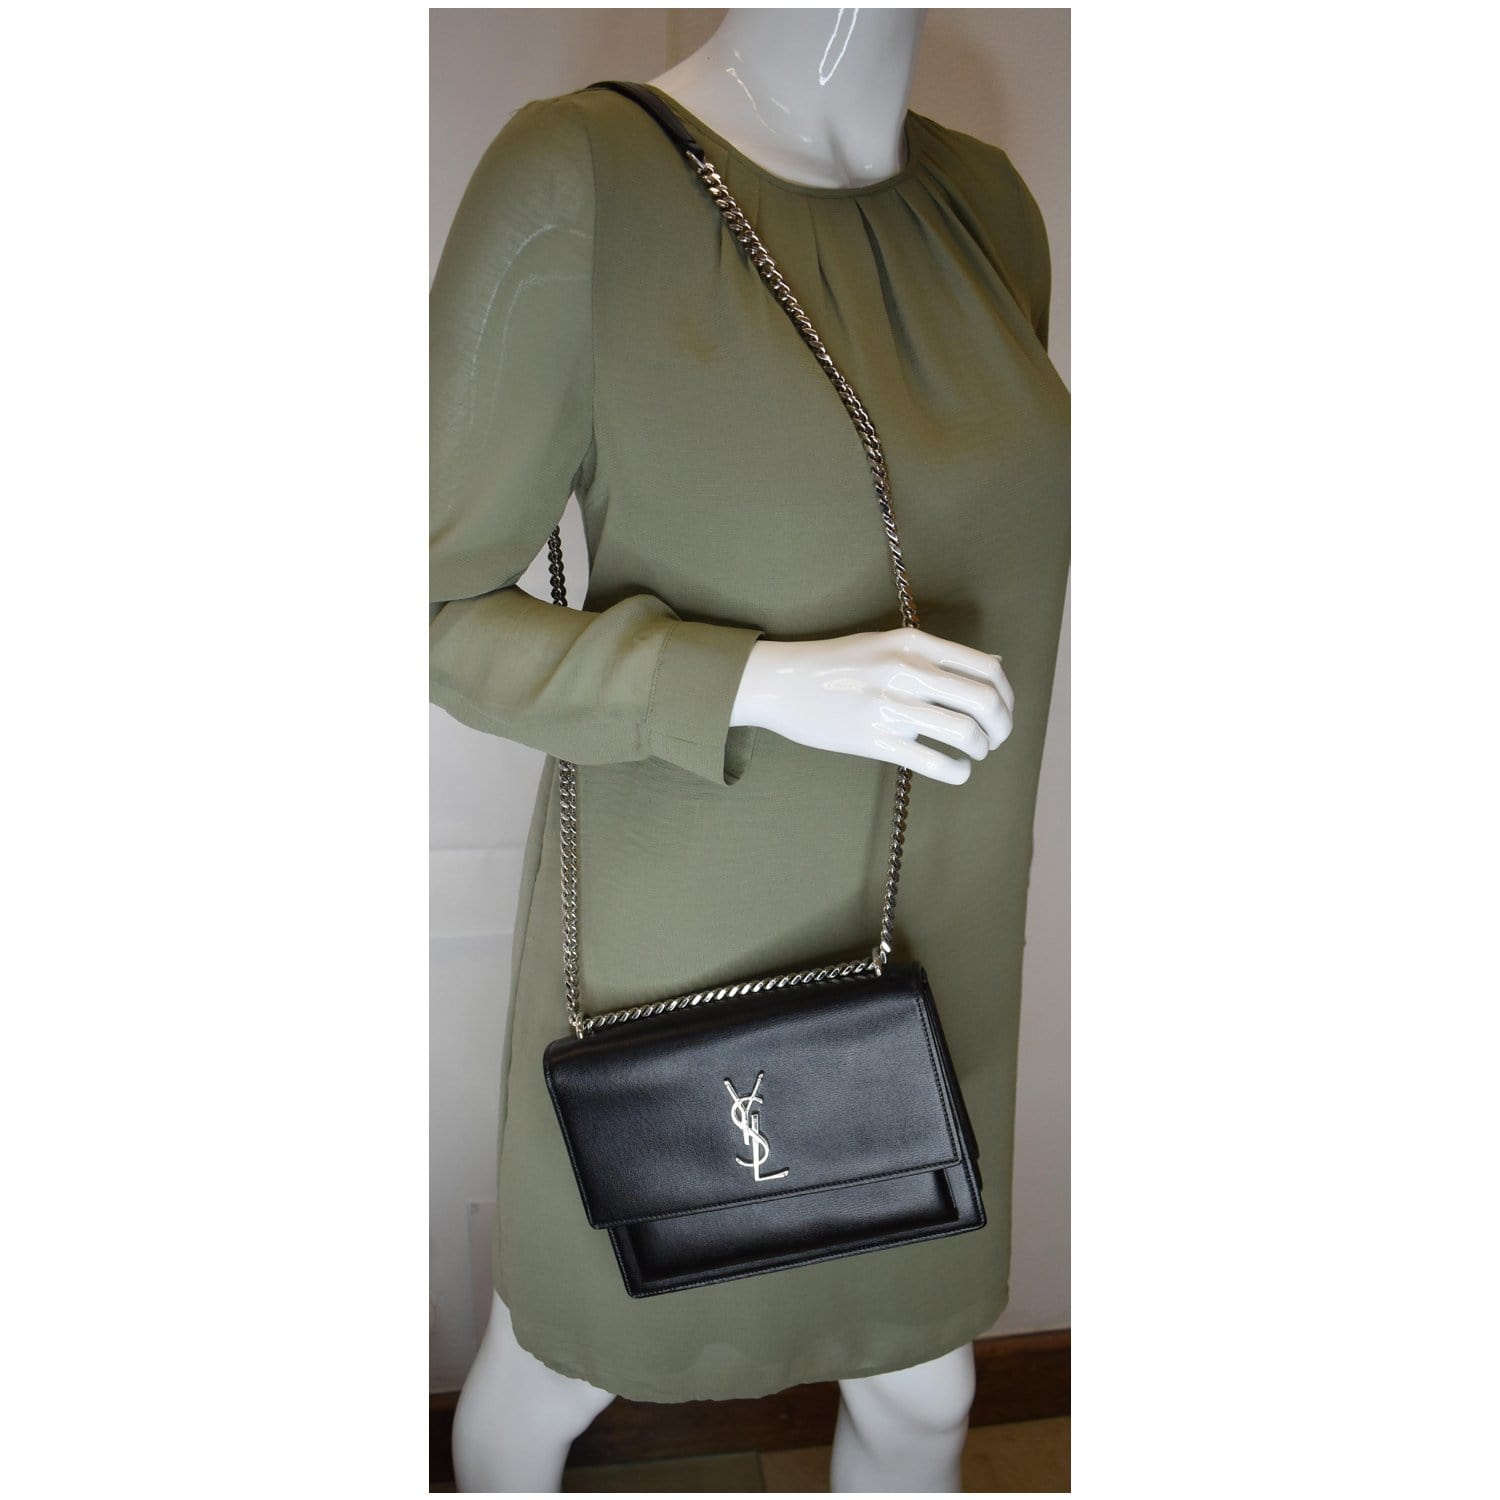 Saint Laurent - Sunset Medium Leather Shoulder Bag - Womens - Black